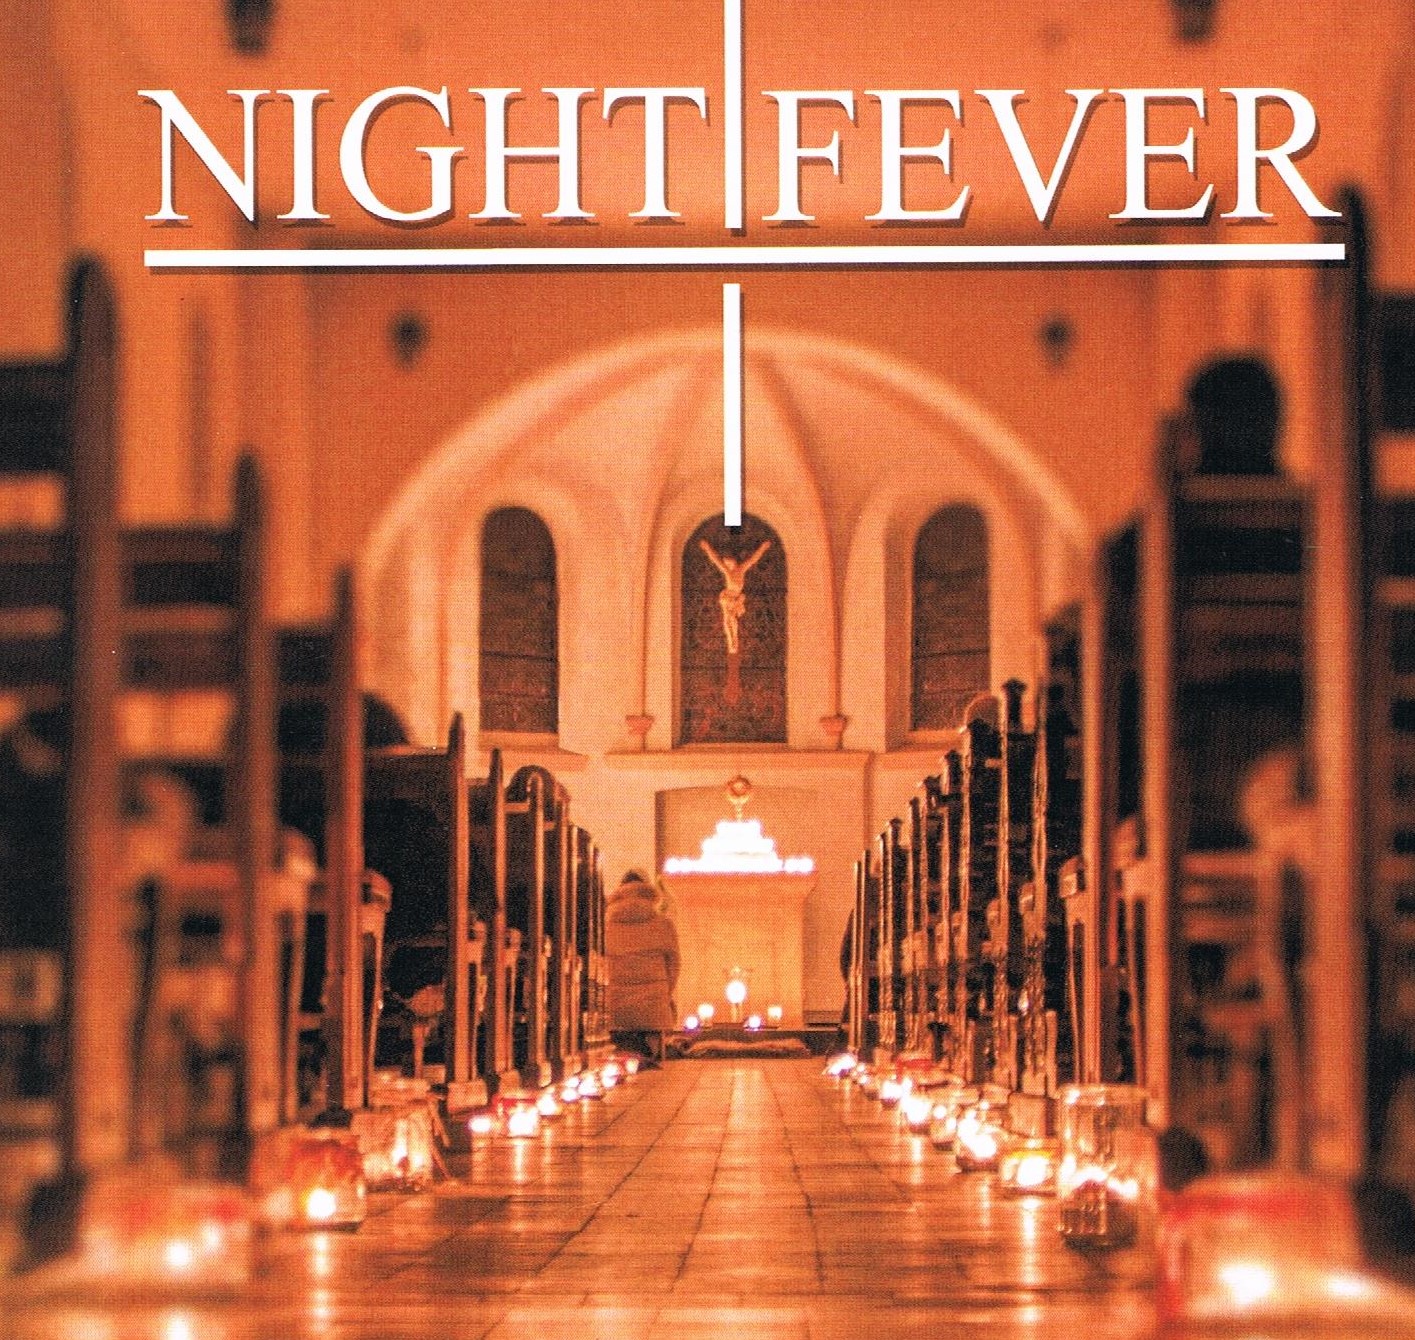 Night-fever (c) Richard Günnewig